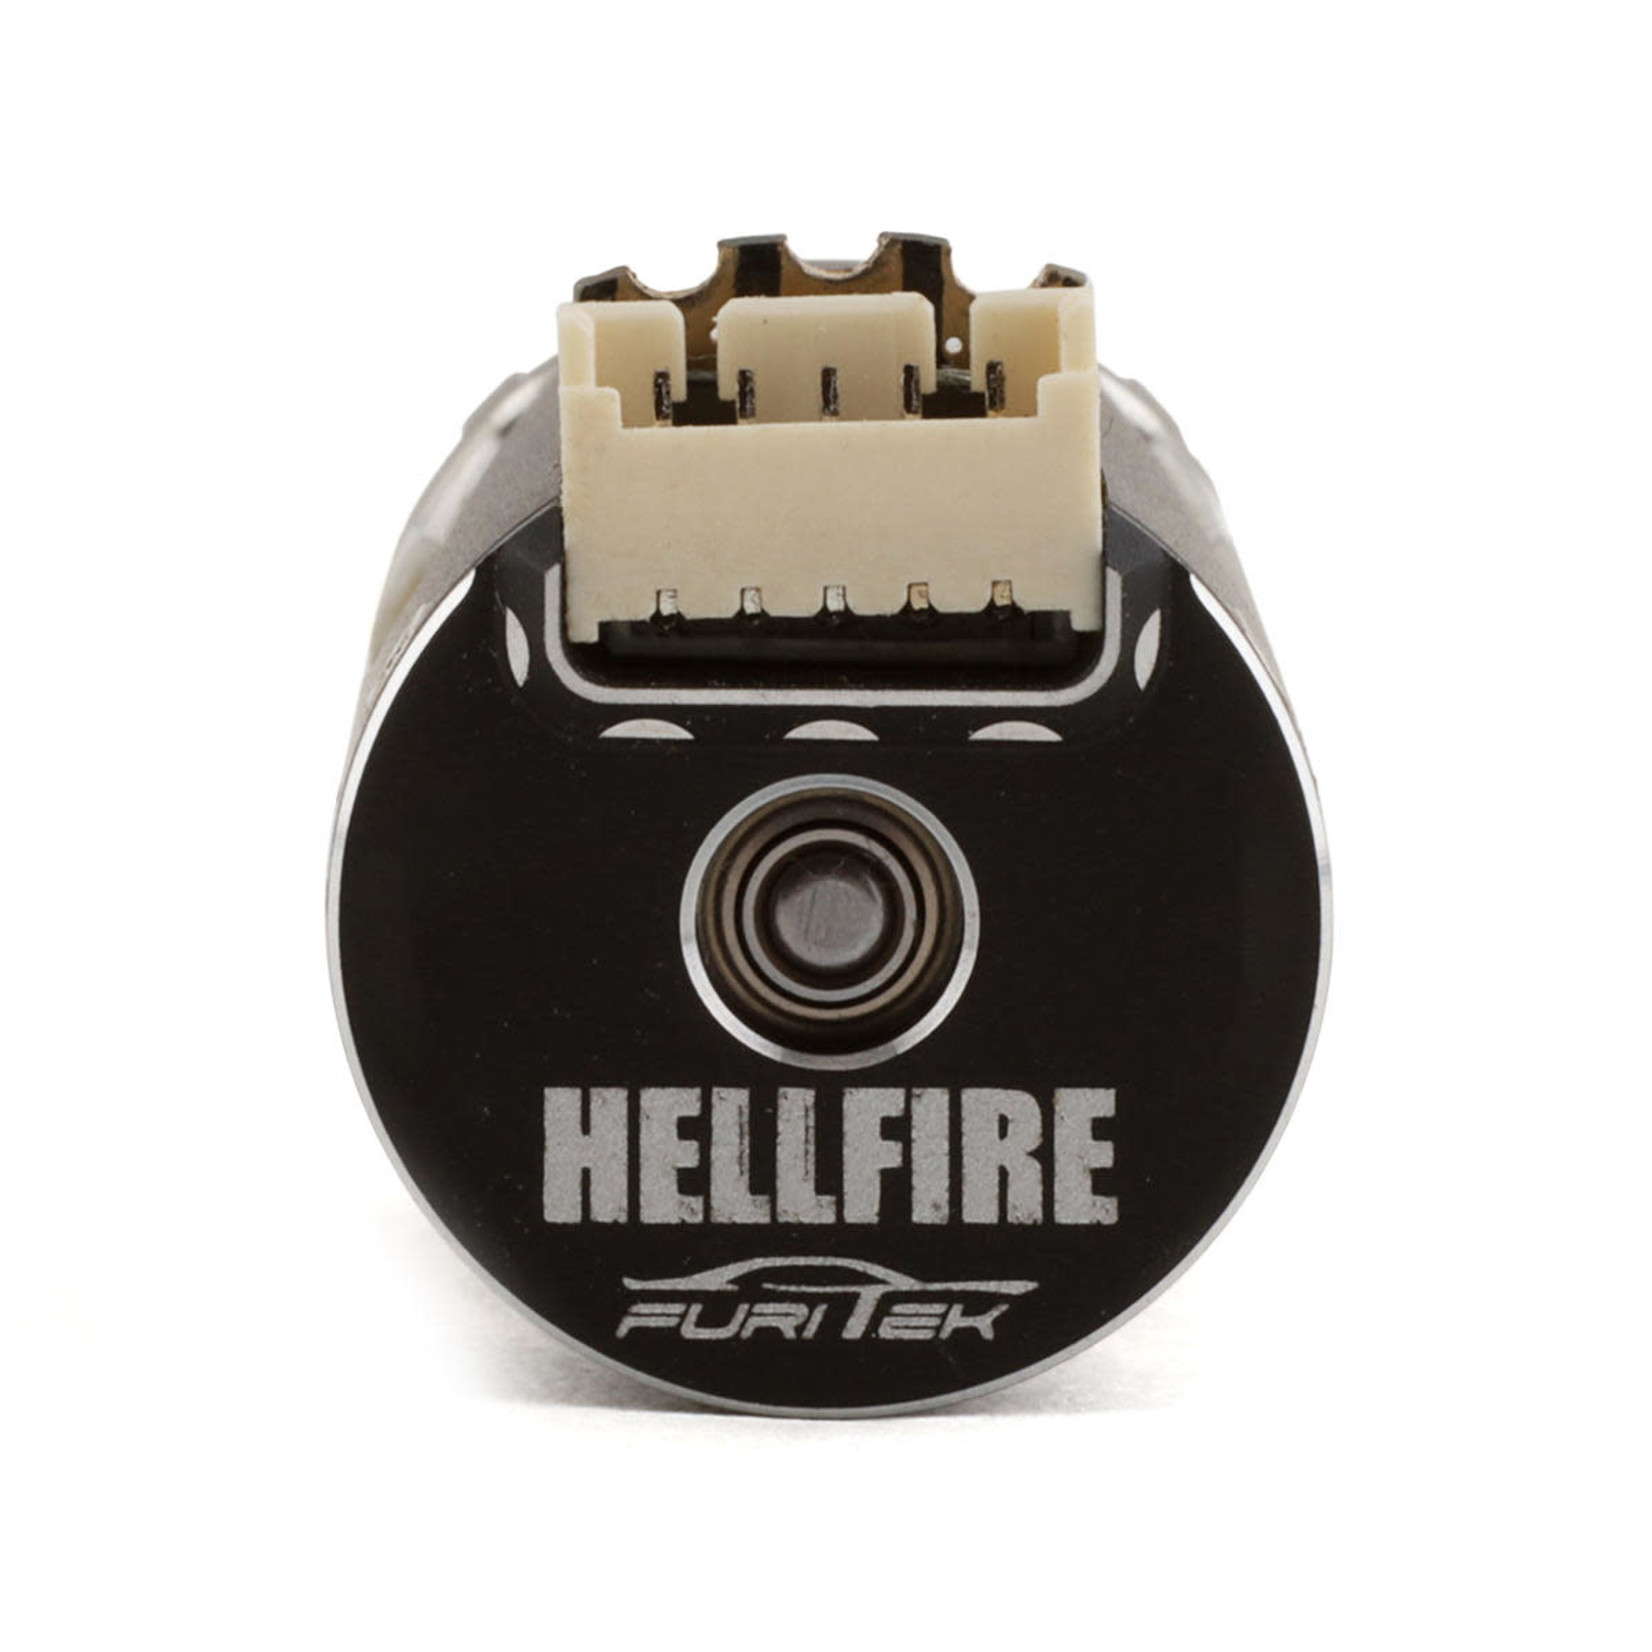 Furitek Furitek Hellfire 1410 3500kV Sensored Brushless Motor (Black) #FUR-2249